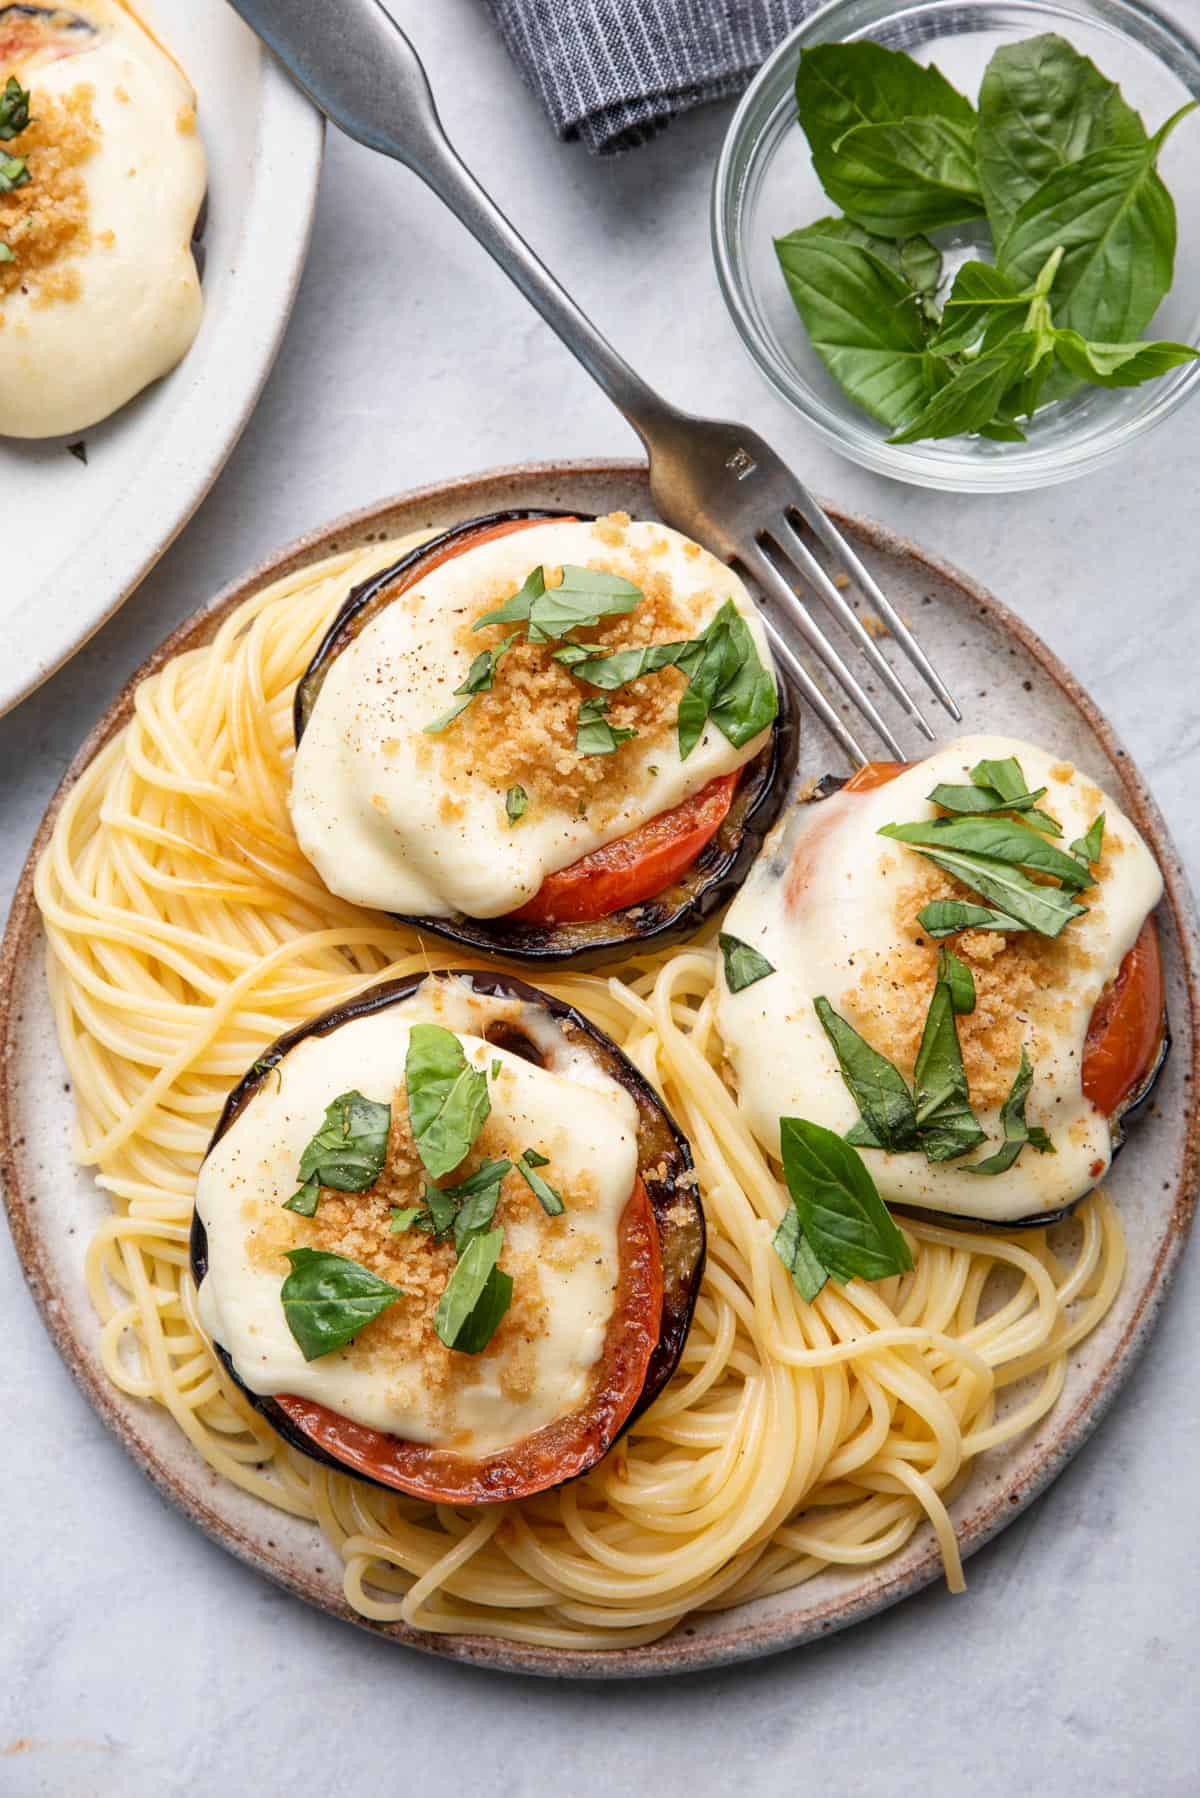 3 slices of eggplant parmesan on top of spaghetti